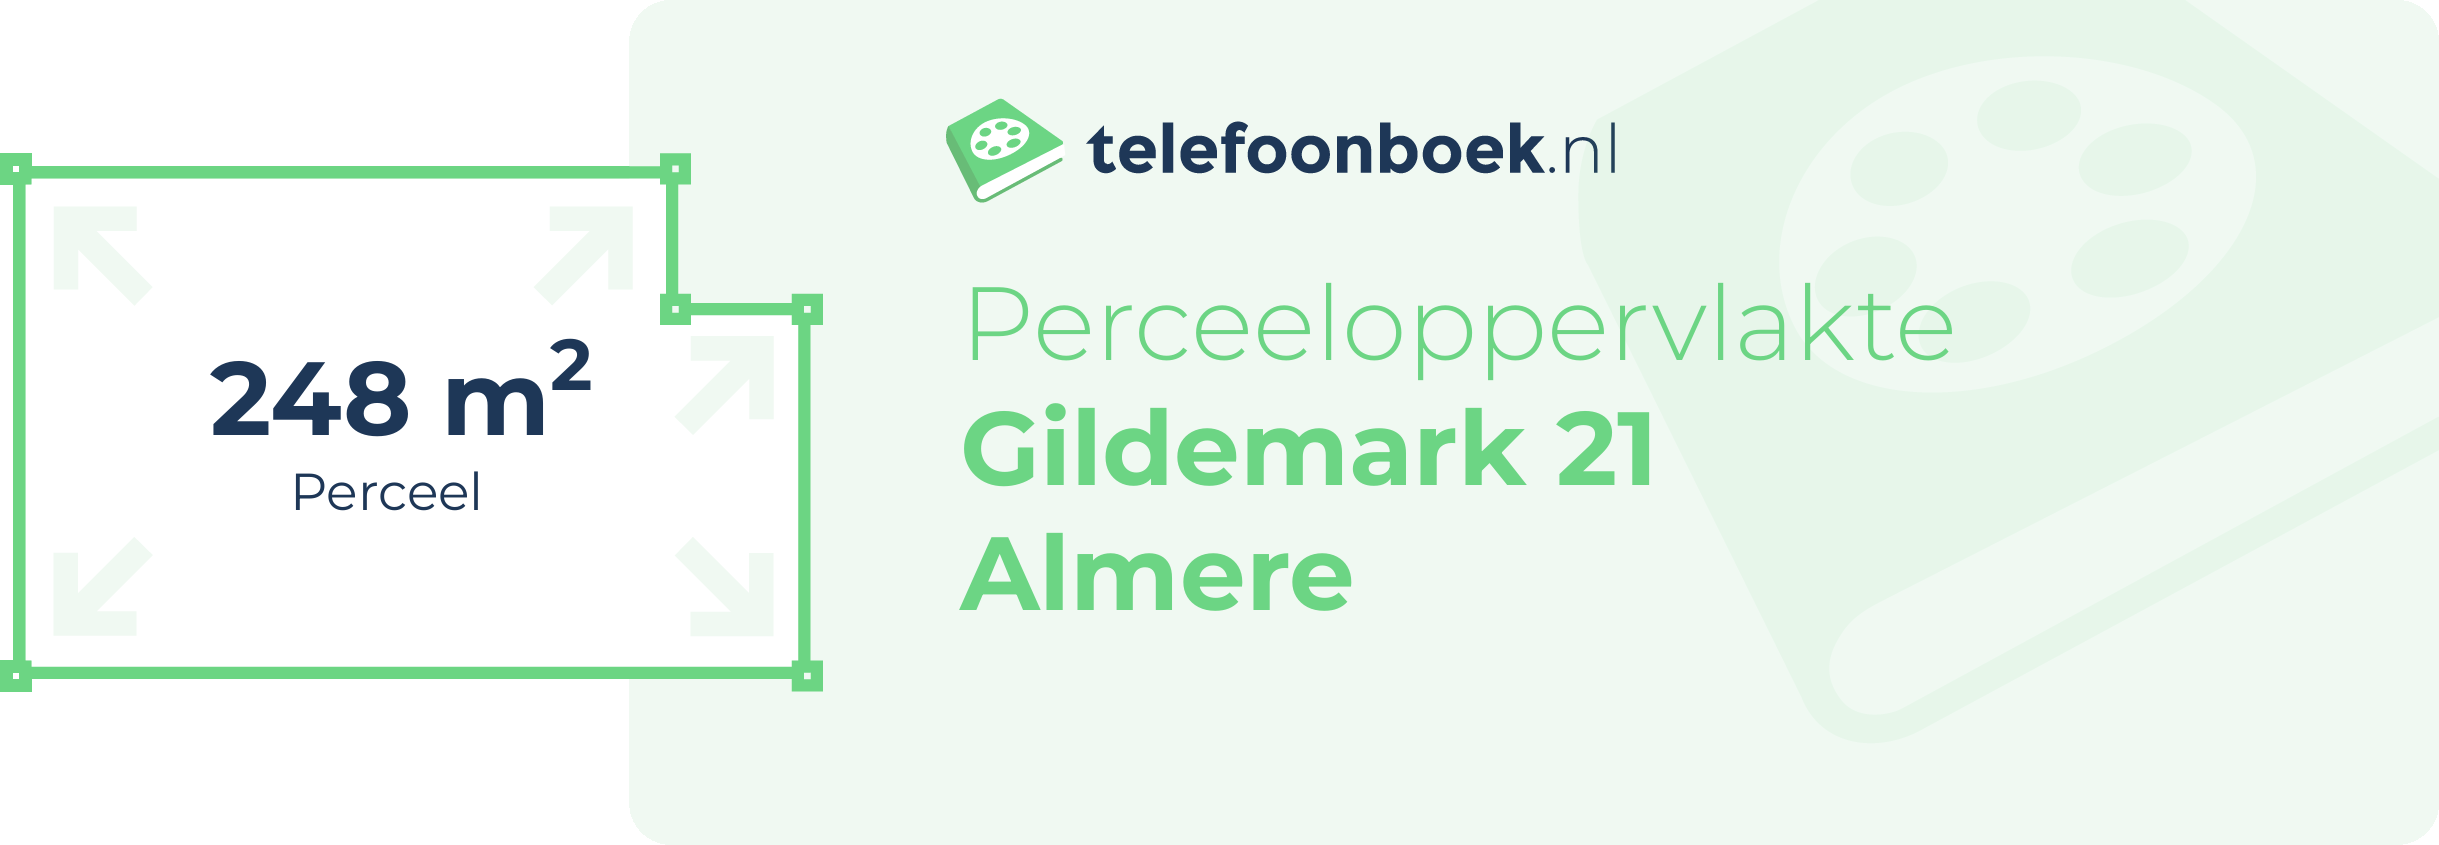 Perceeloppervlakte Gildemark 21 Almere